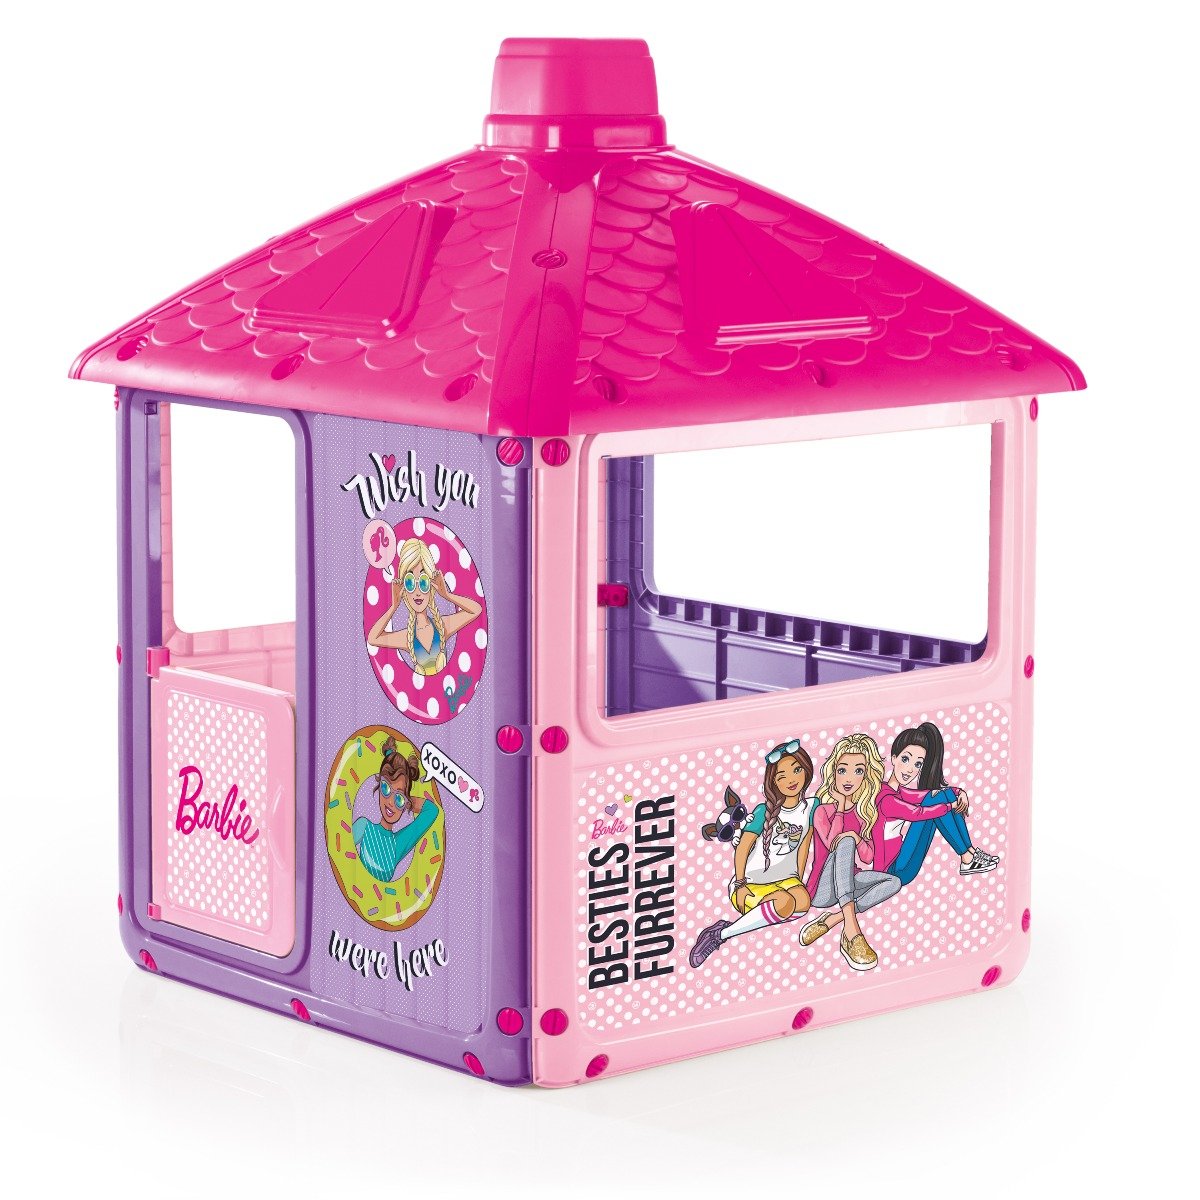 Casuta copii Barbie City House imagine